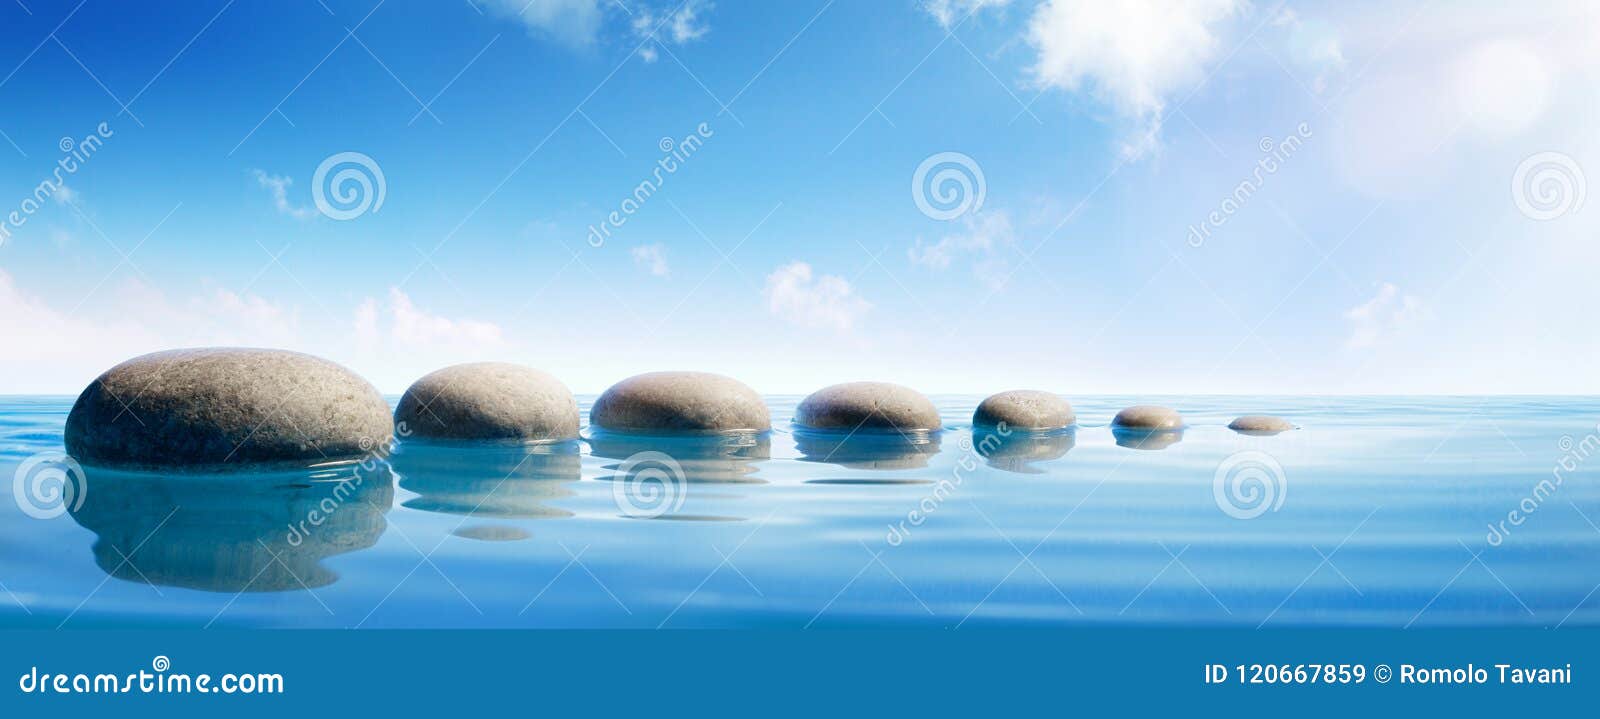 step stones in blue water